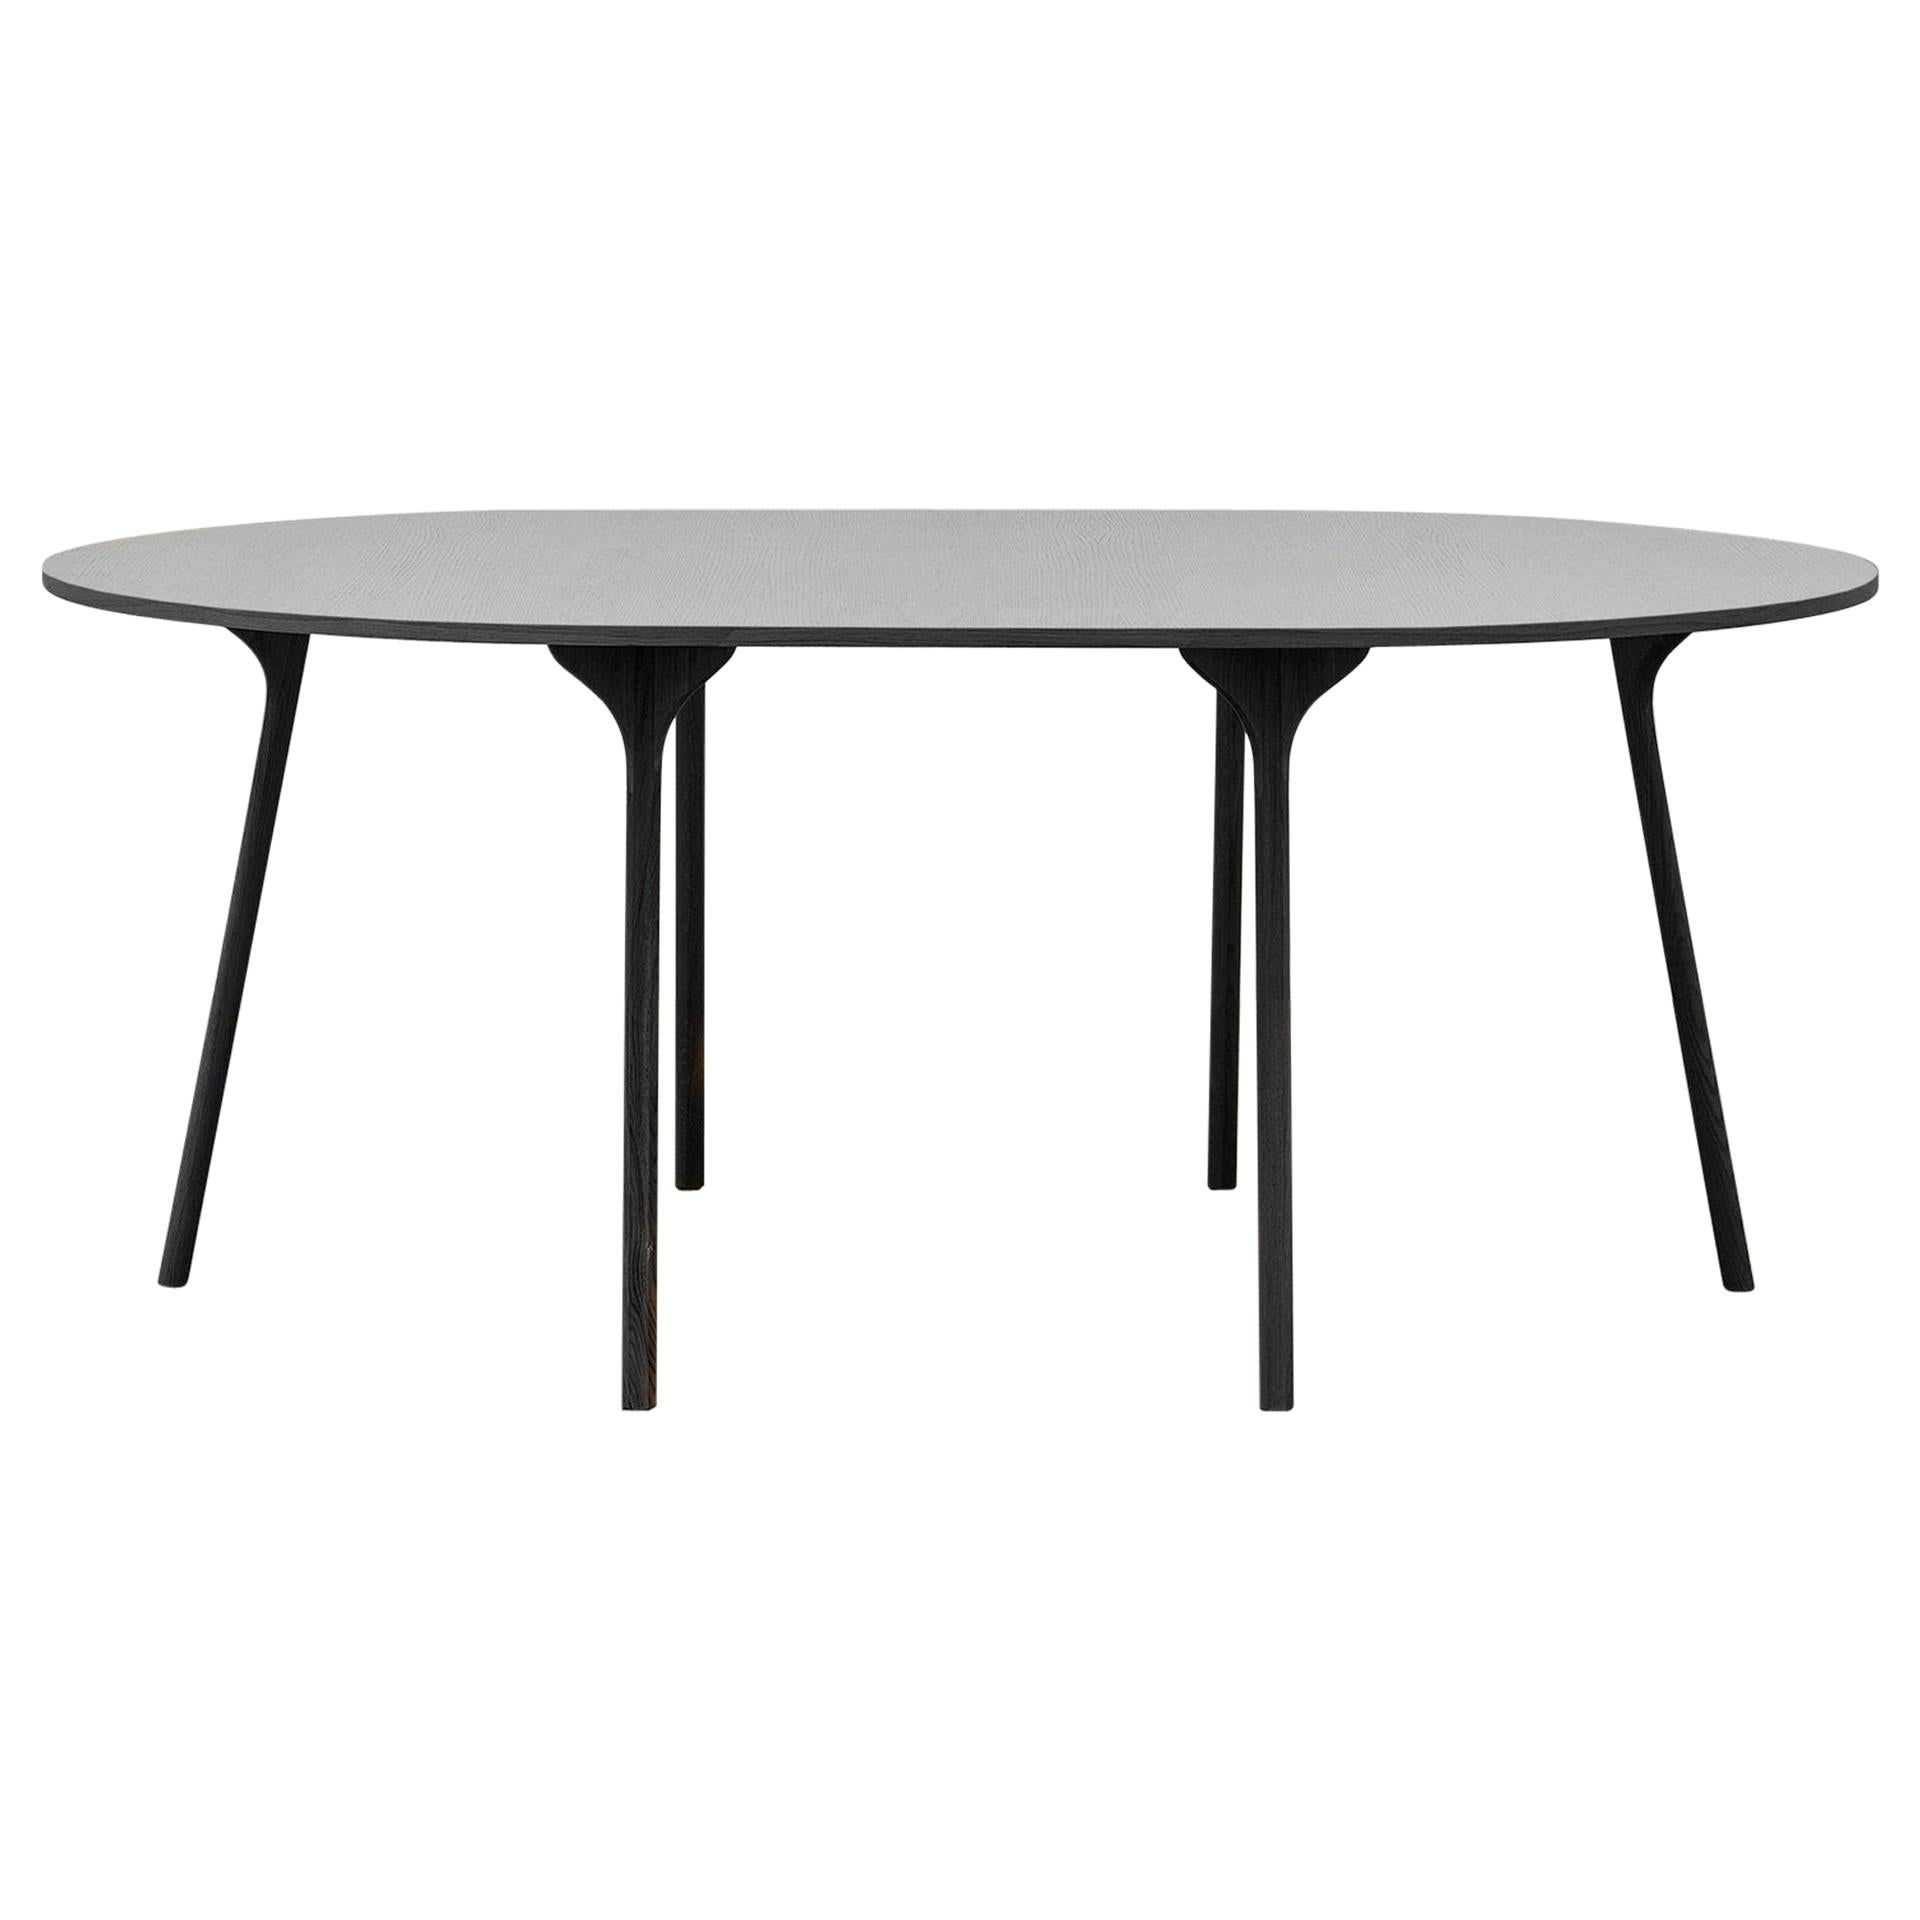 PH Circle Table, 1270x1820mm, black oak wood legs, veneer table plate and edge